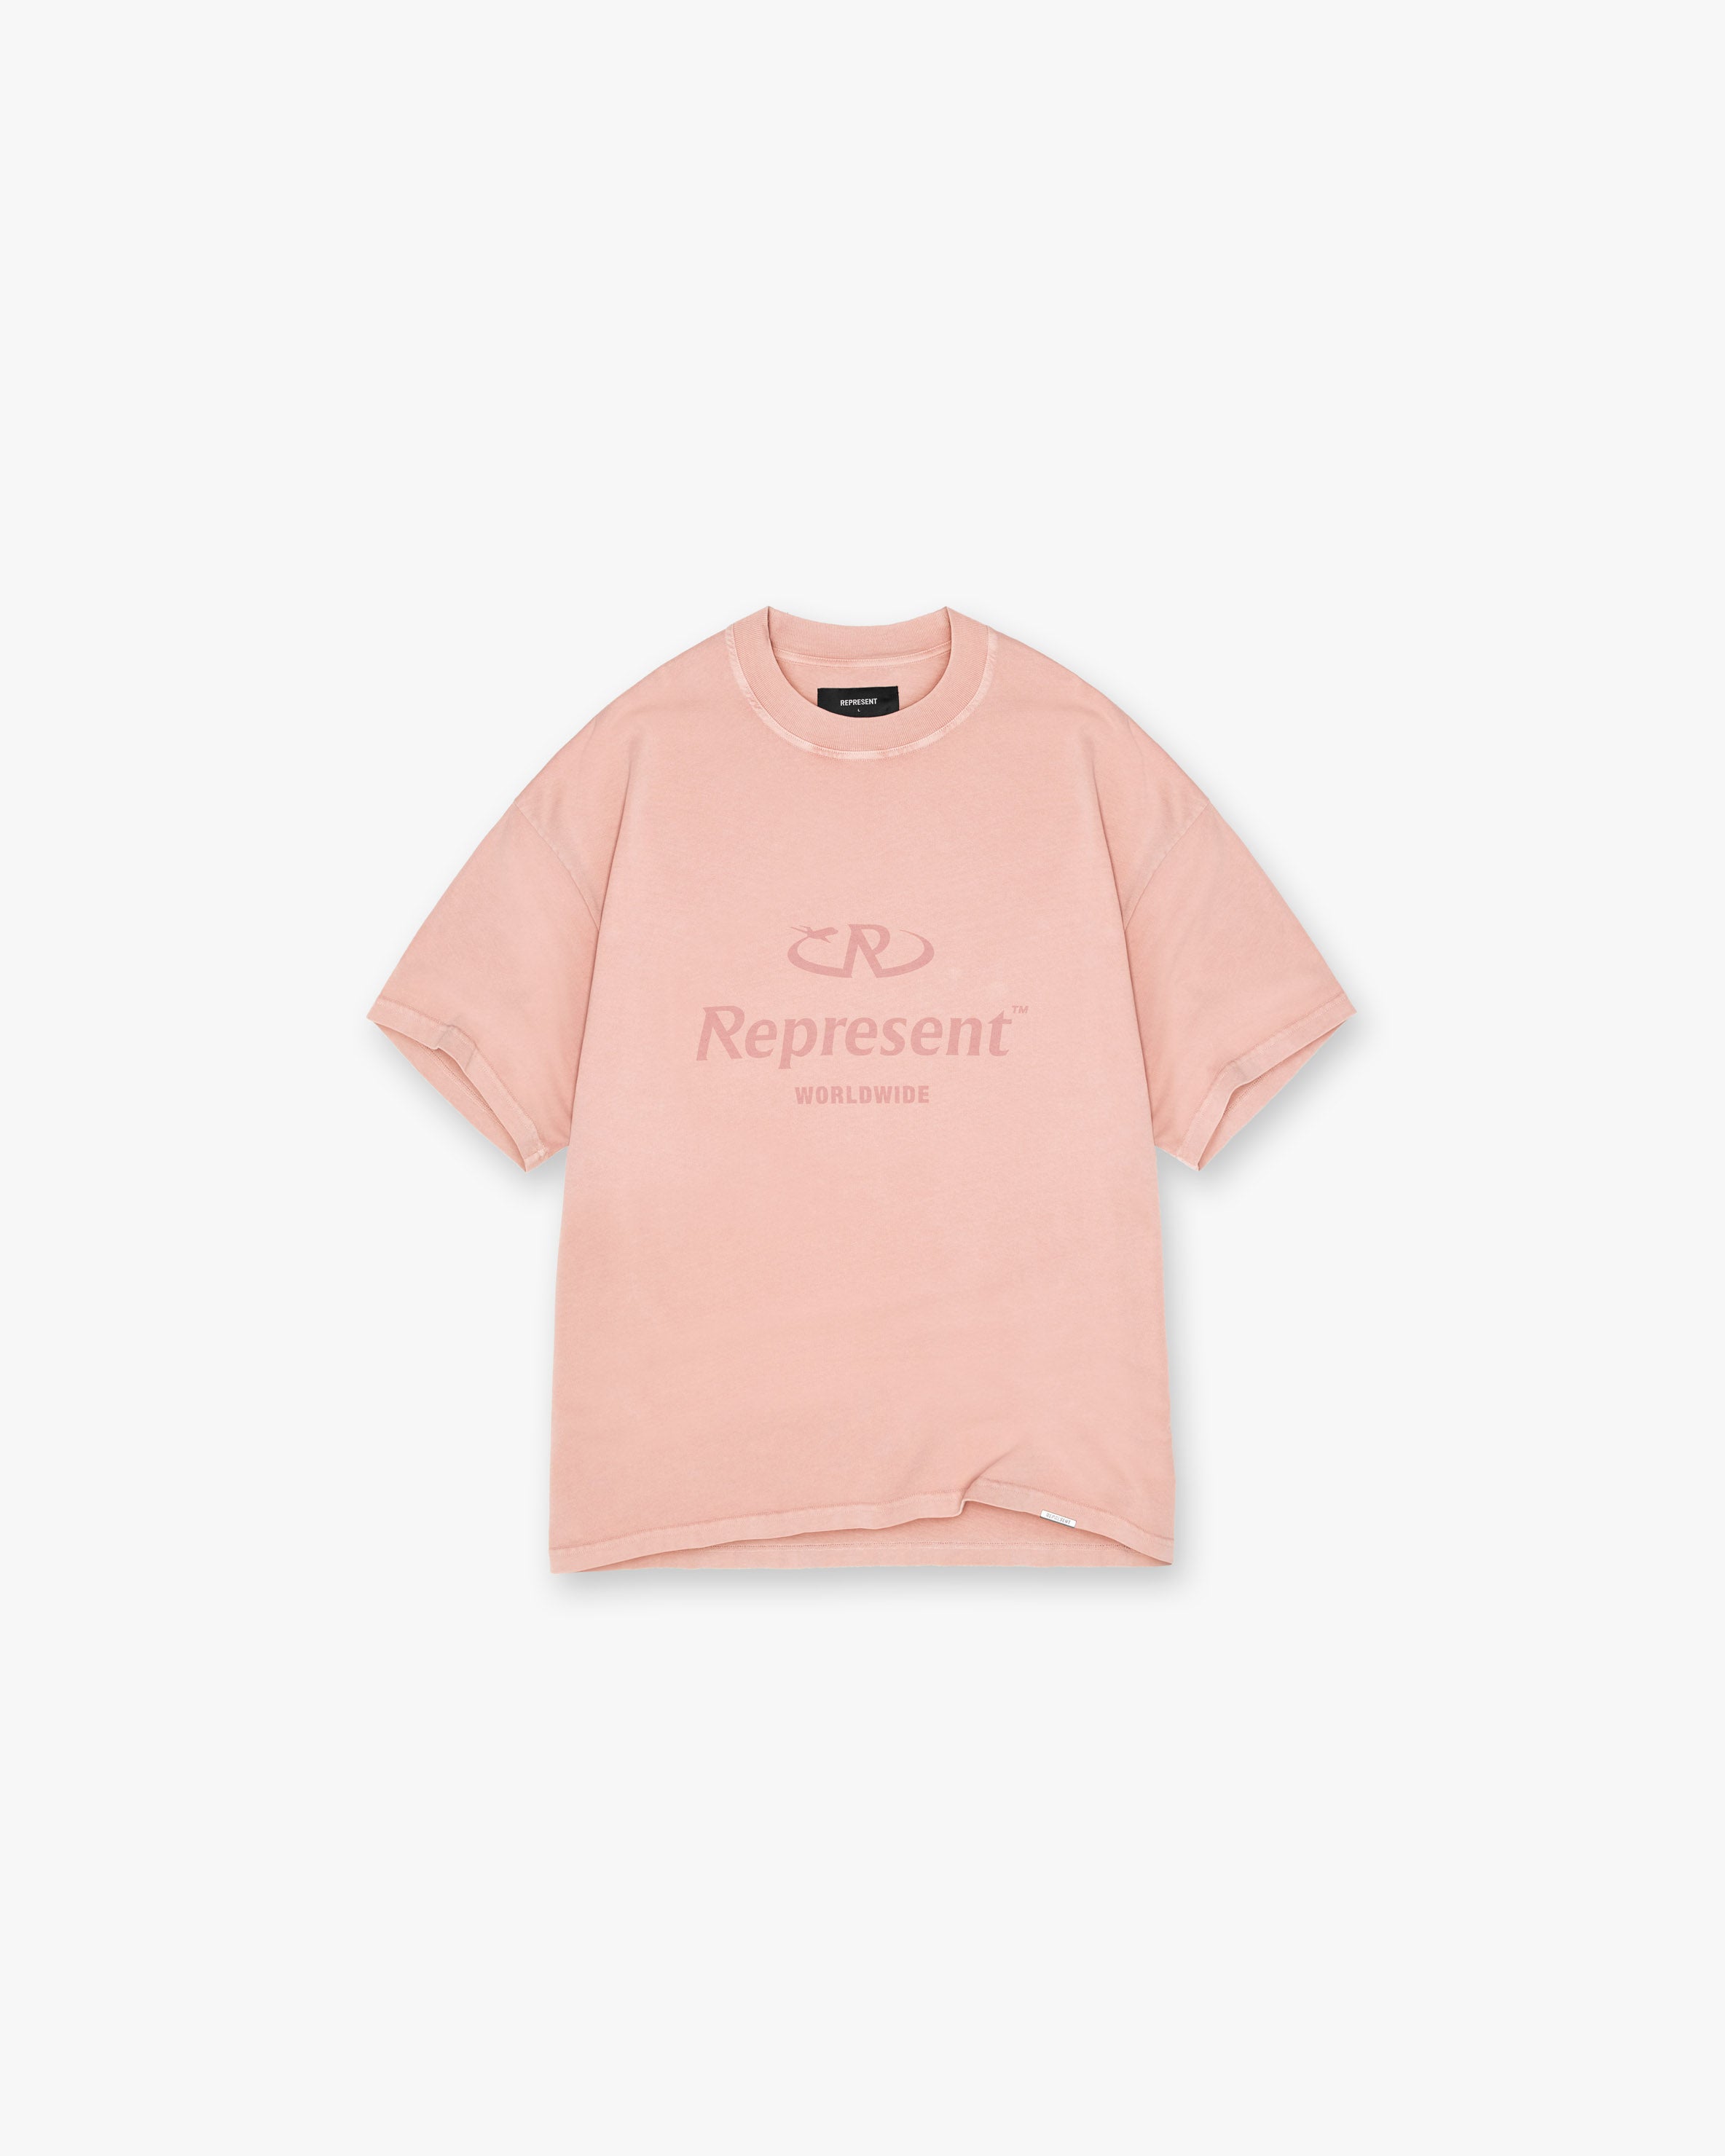 Worldwide T-Shirt | Pink | REPRESENT CLO | T-Shirts